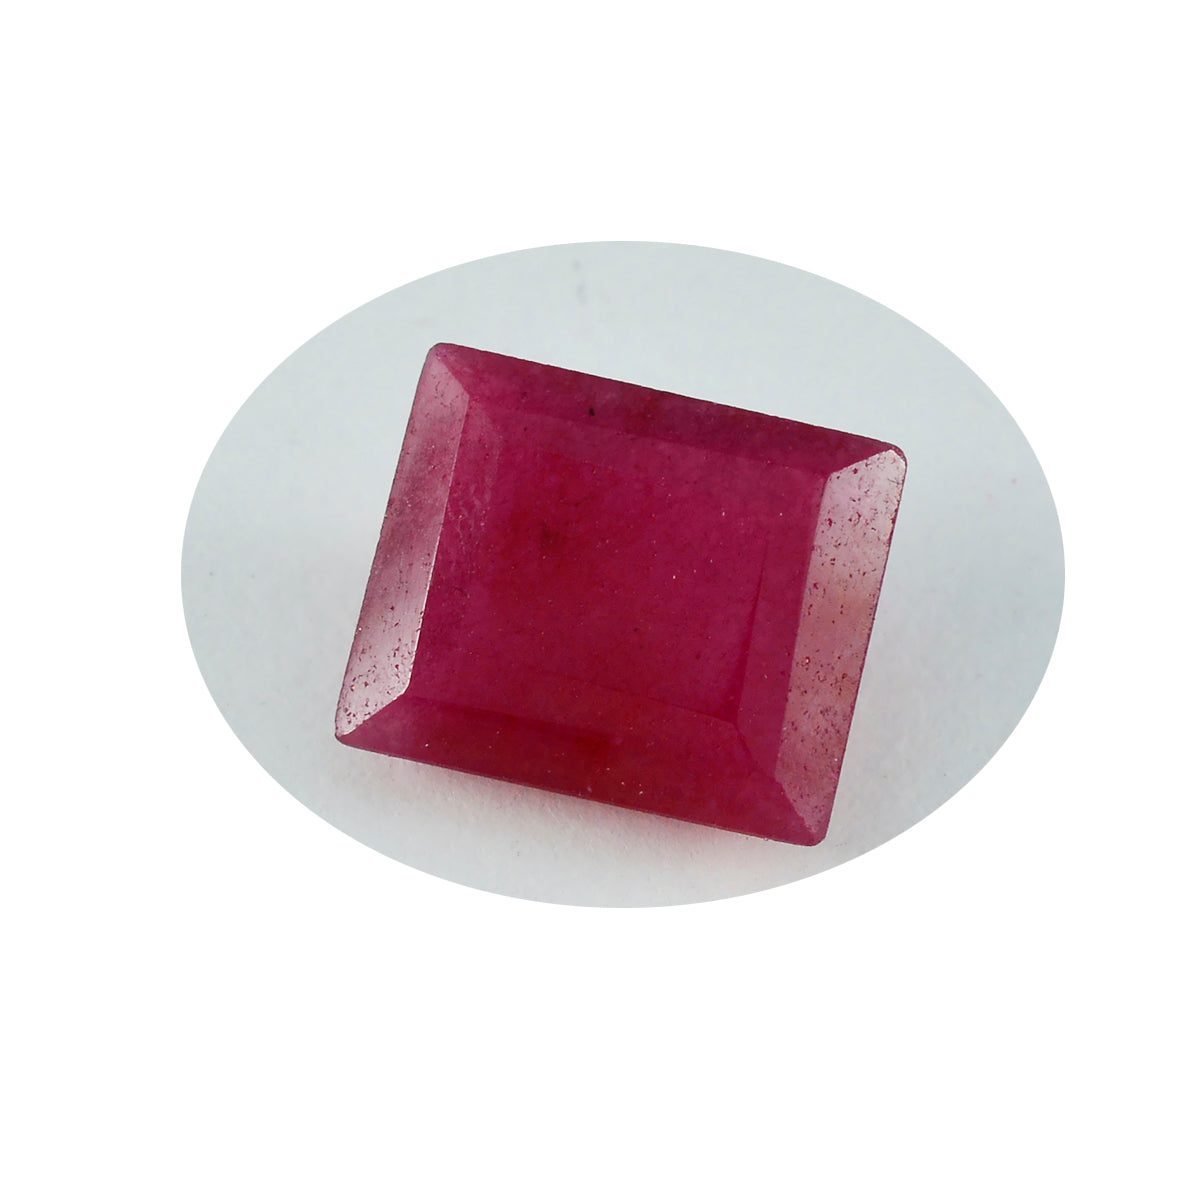 Riyogems 1PC echte rode jaspis gefacetteerd 8x10 mm achthoekige vorm mooie kwaliteit losse edelsteen